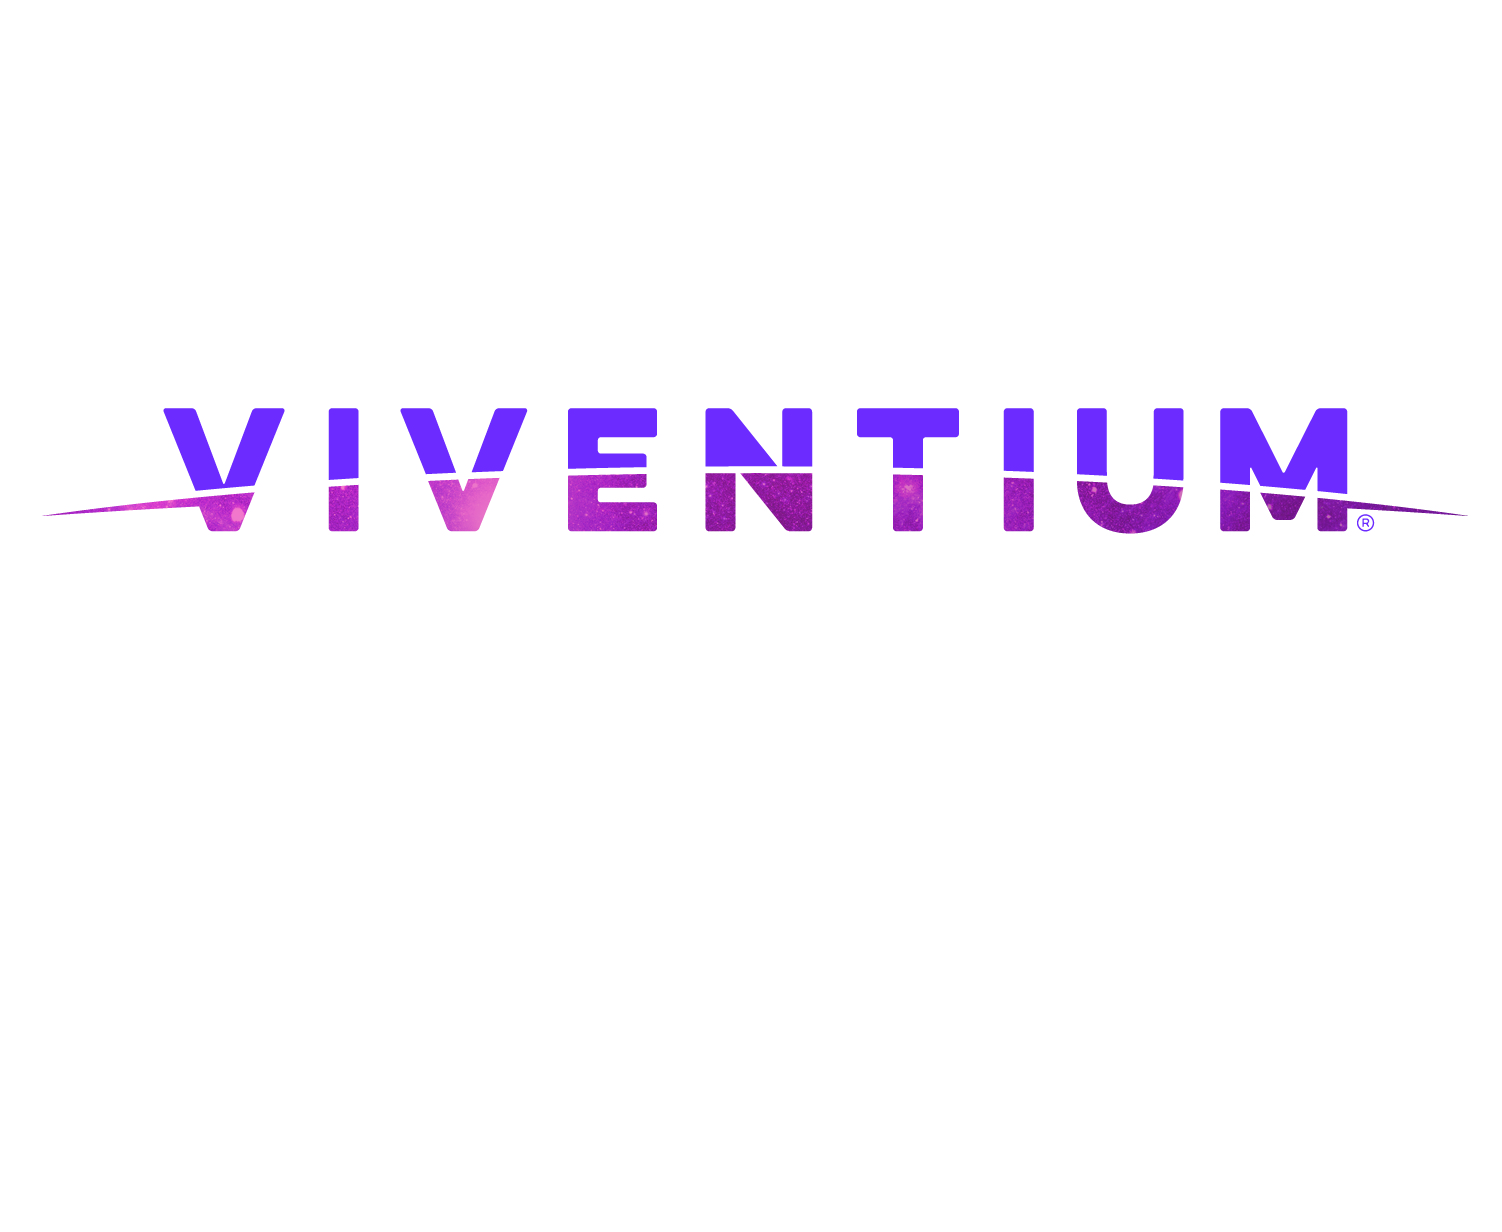 Viventium named “Fro